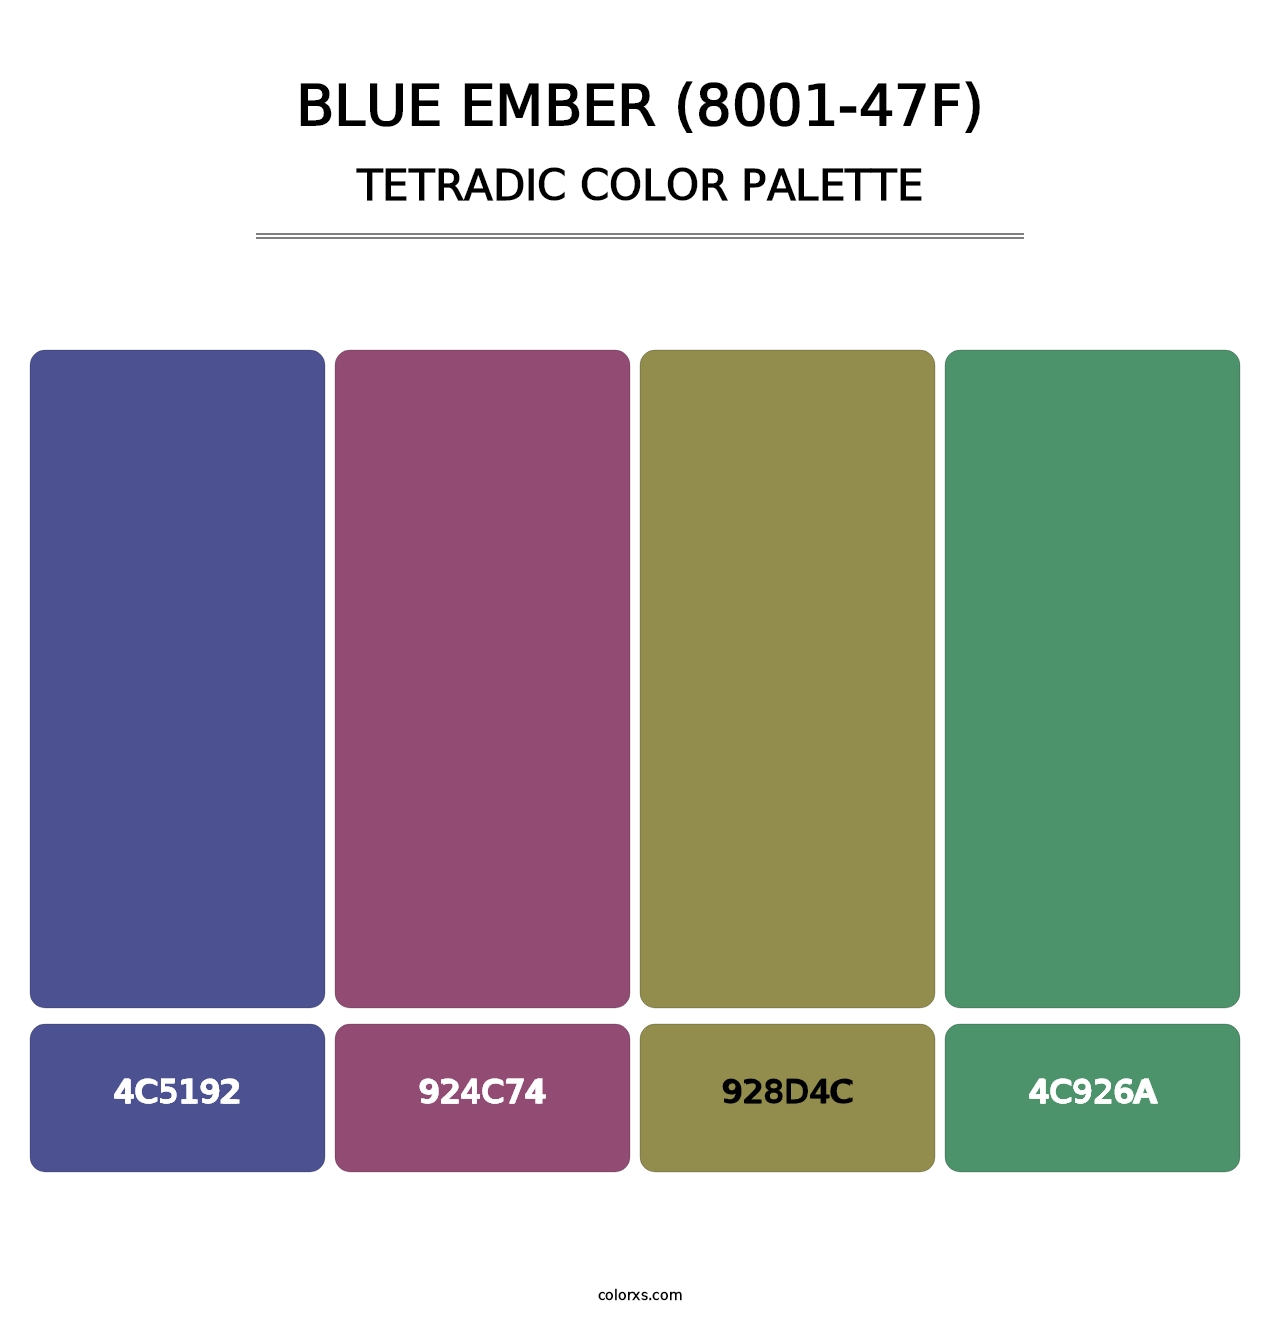 Blue Ember (8001-47F) - Tetradic Color Palette